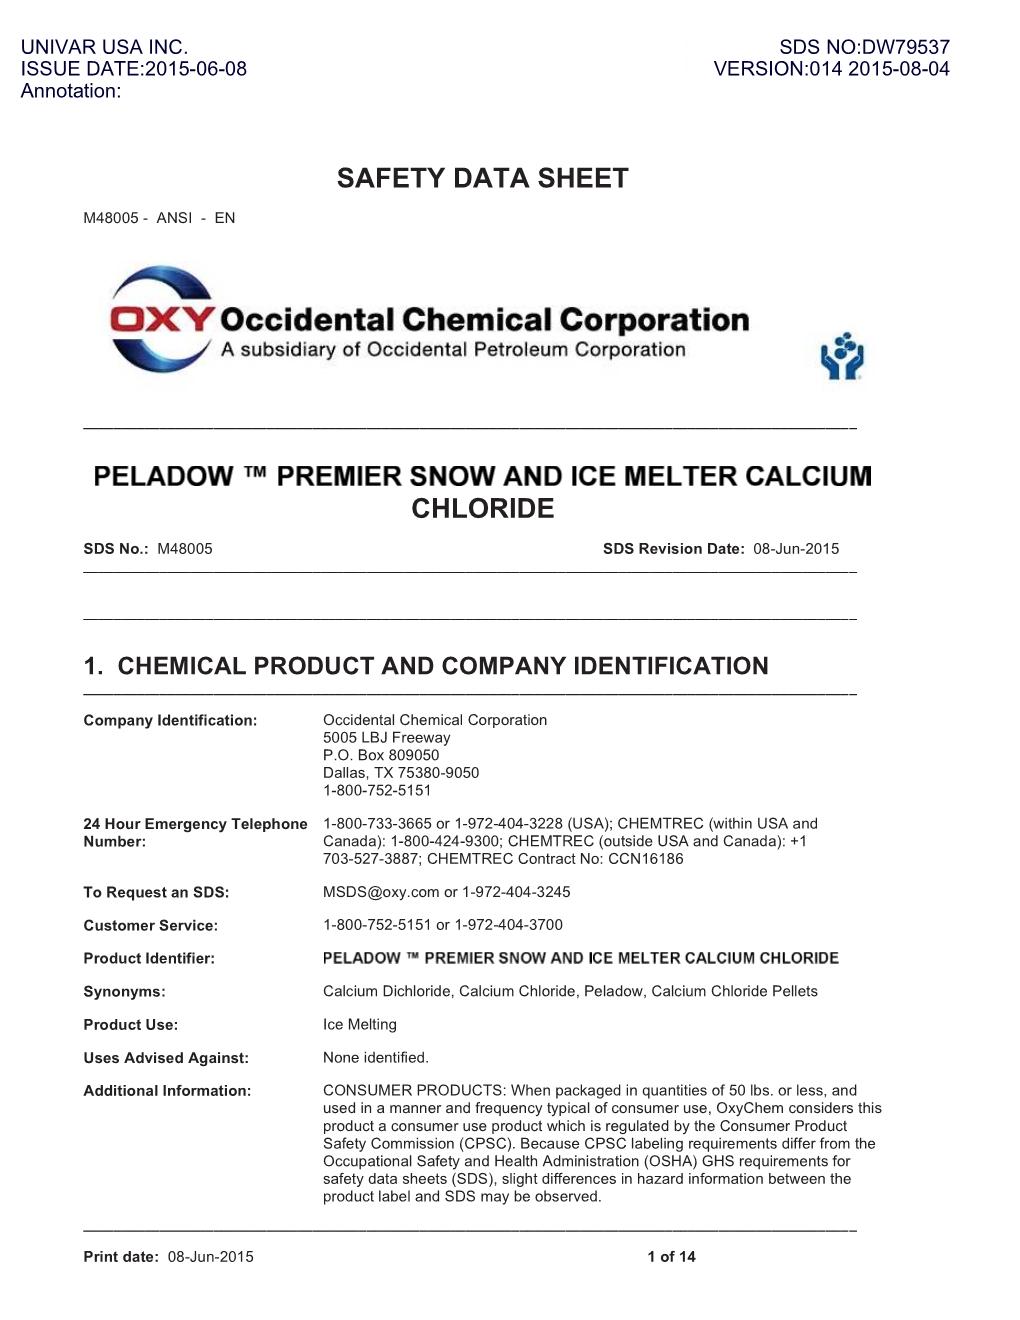 Safety Data Sheet Chloride